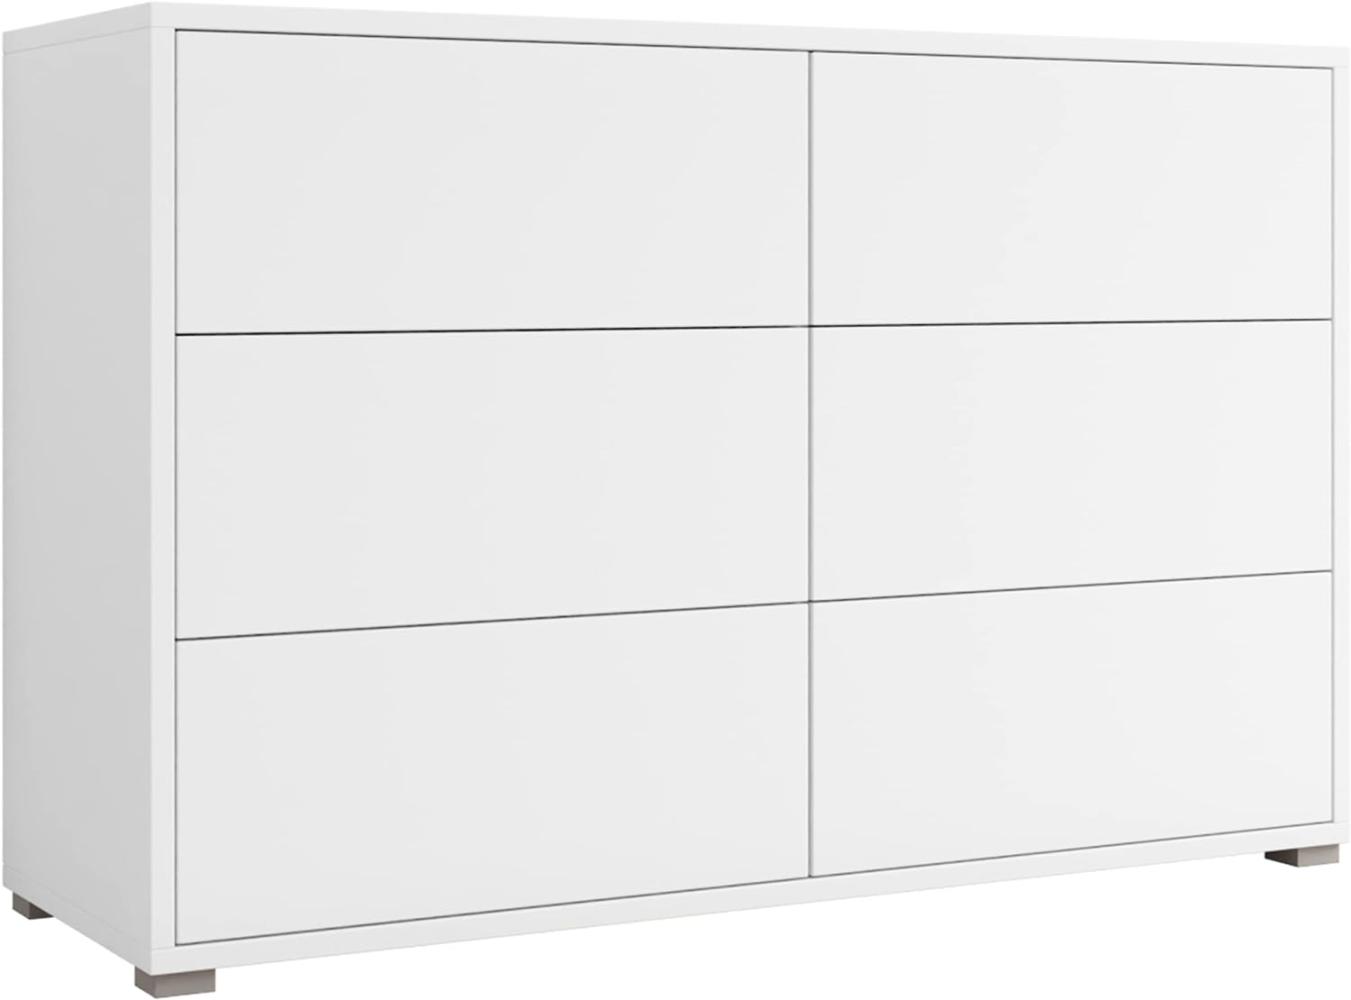 'Gesita K1D4SZ' Kommode, Weiß, 73 x 120 cm Bild 1